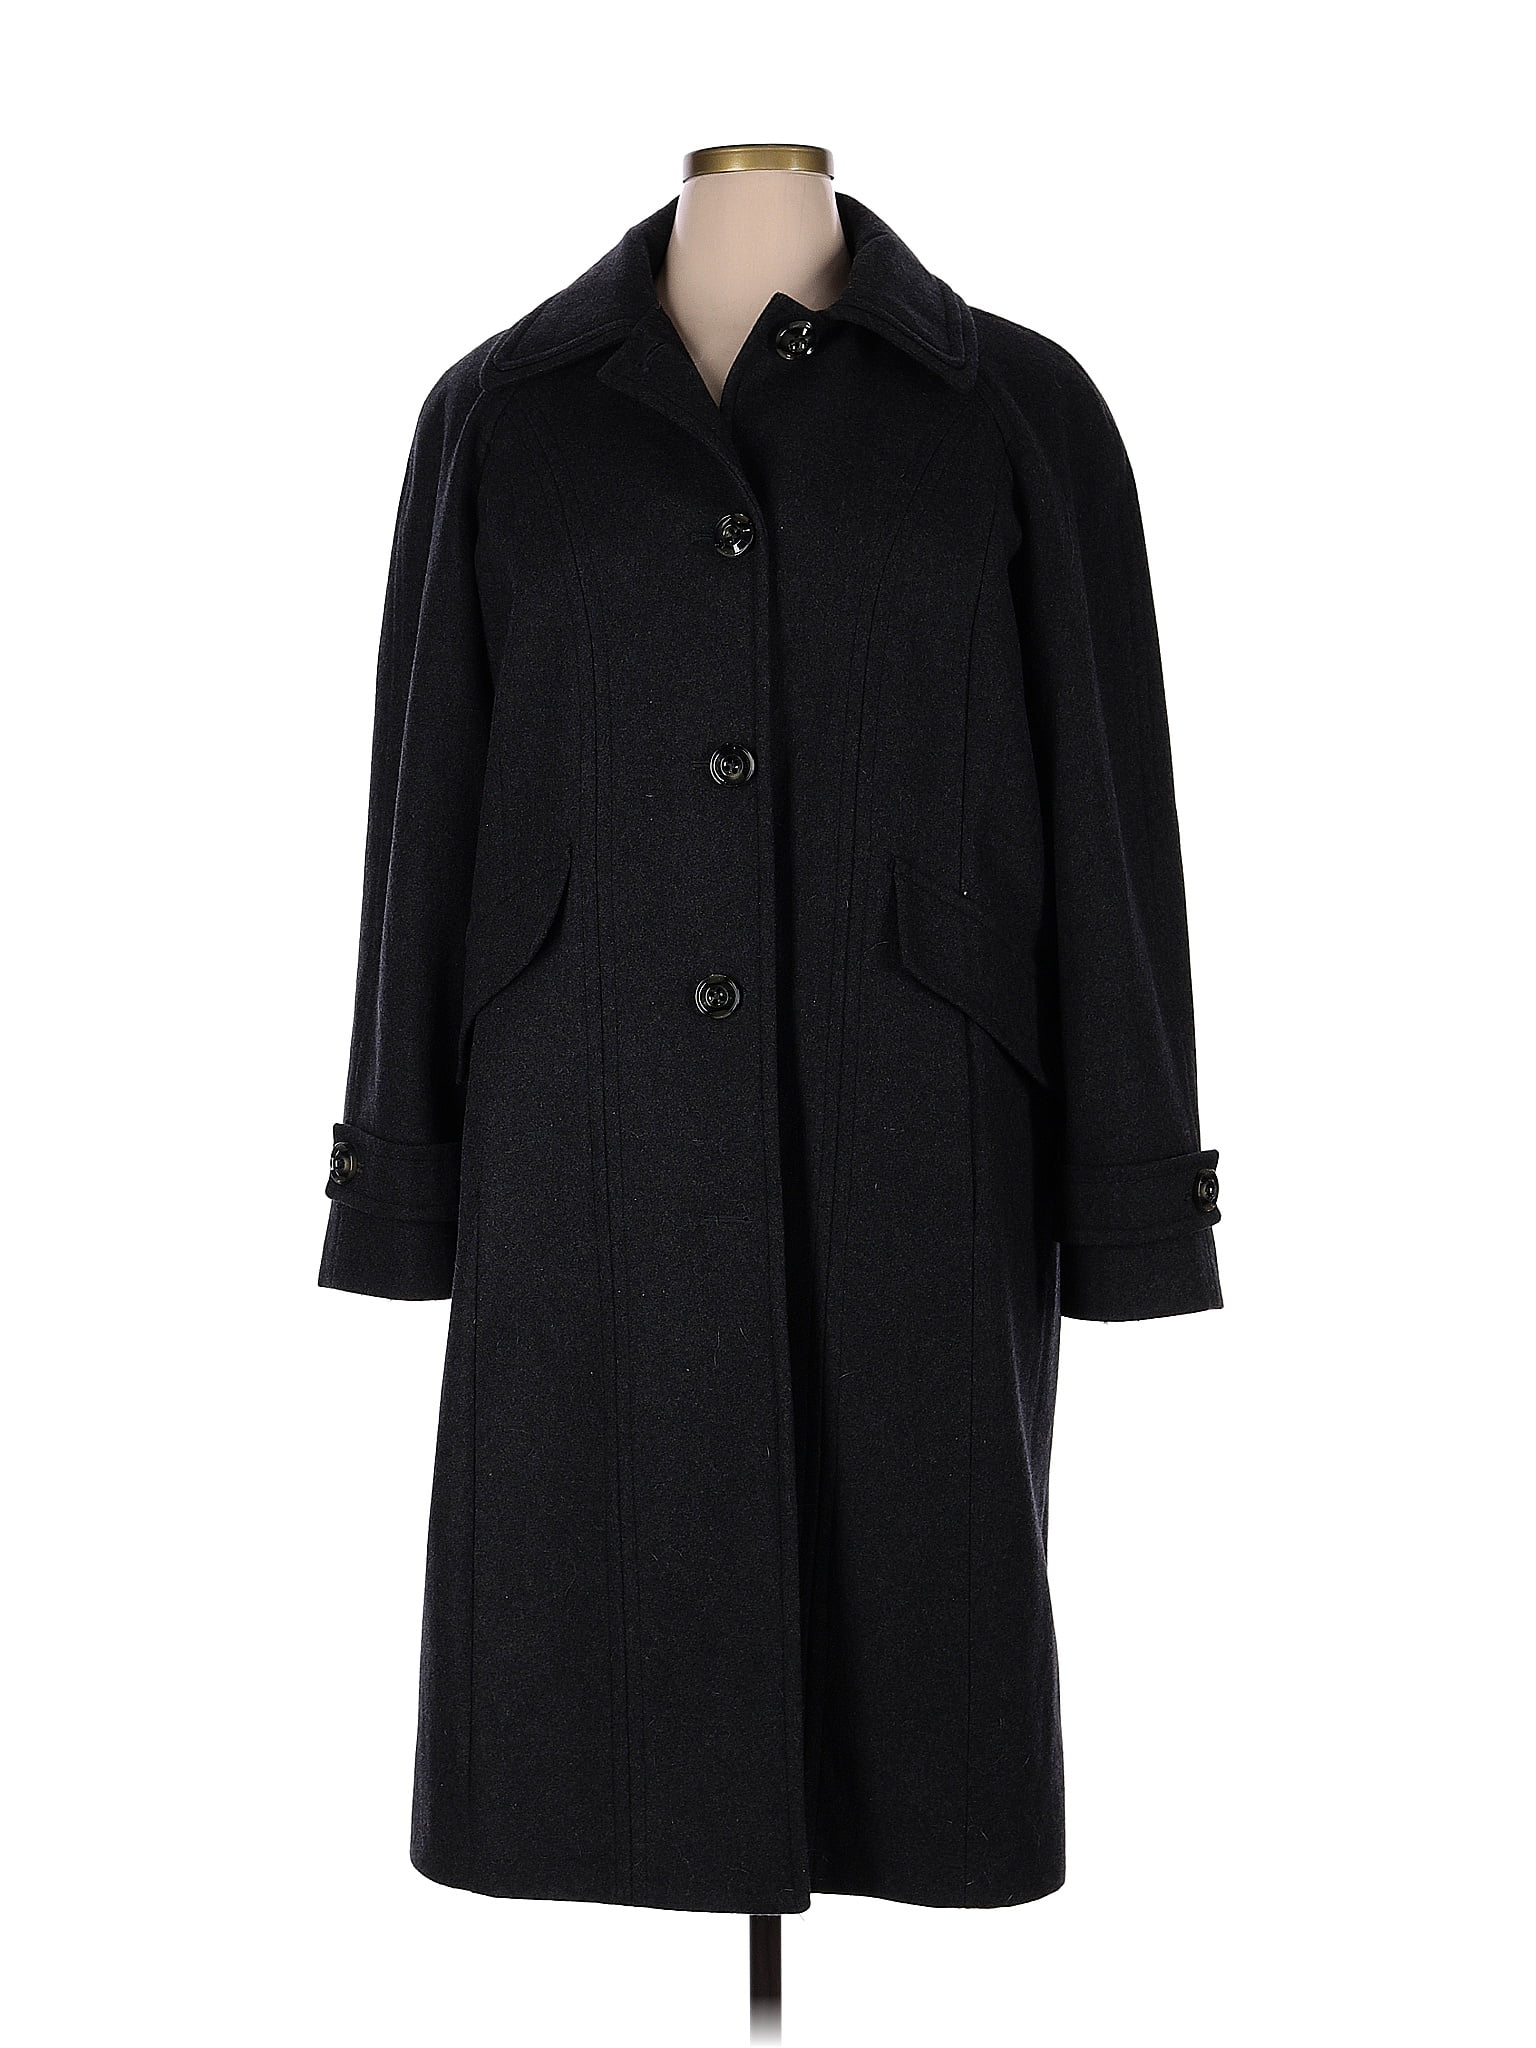 London Fog Black Wool Coat Size 16 - 67% off | thredUP